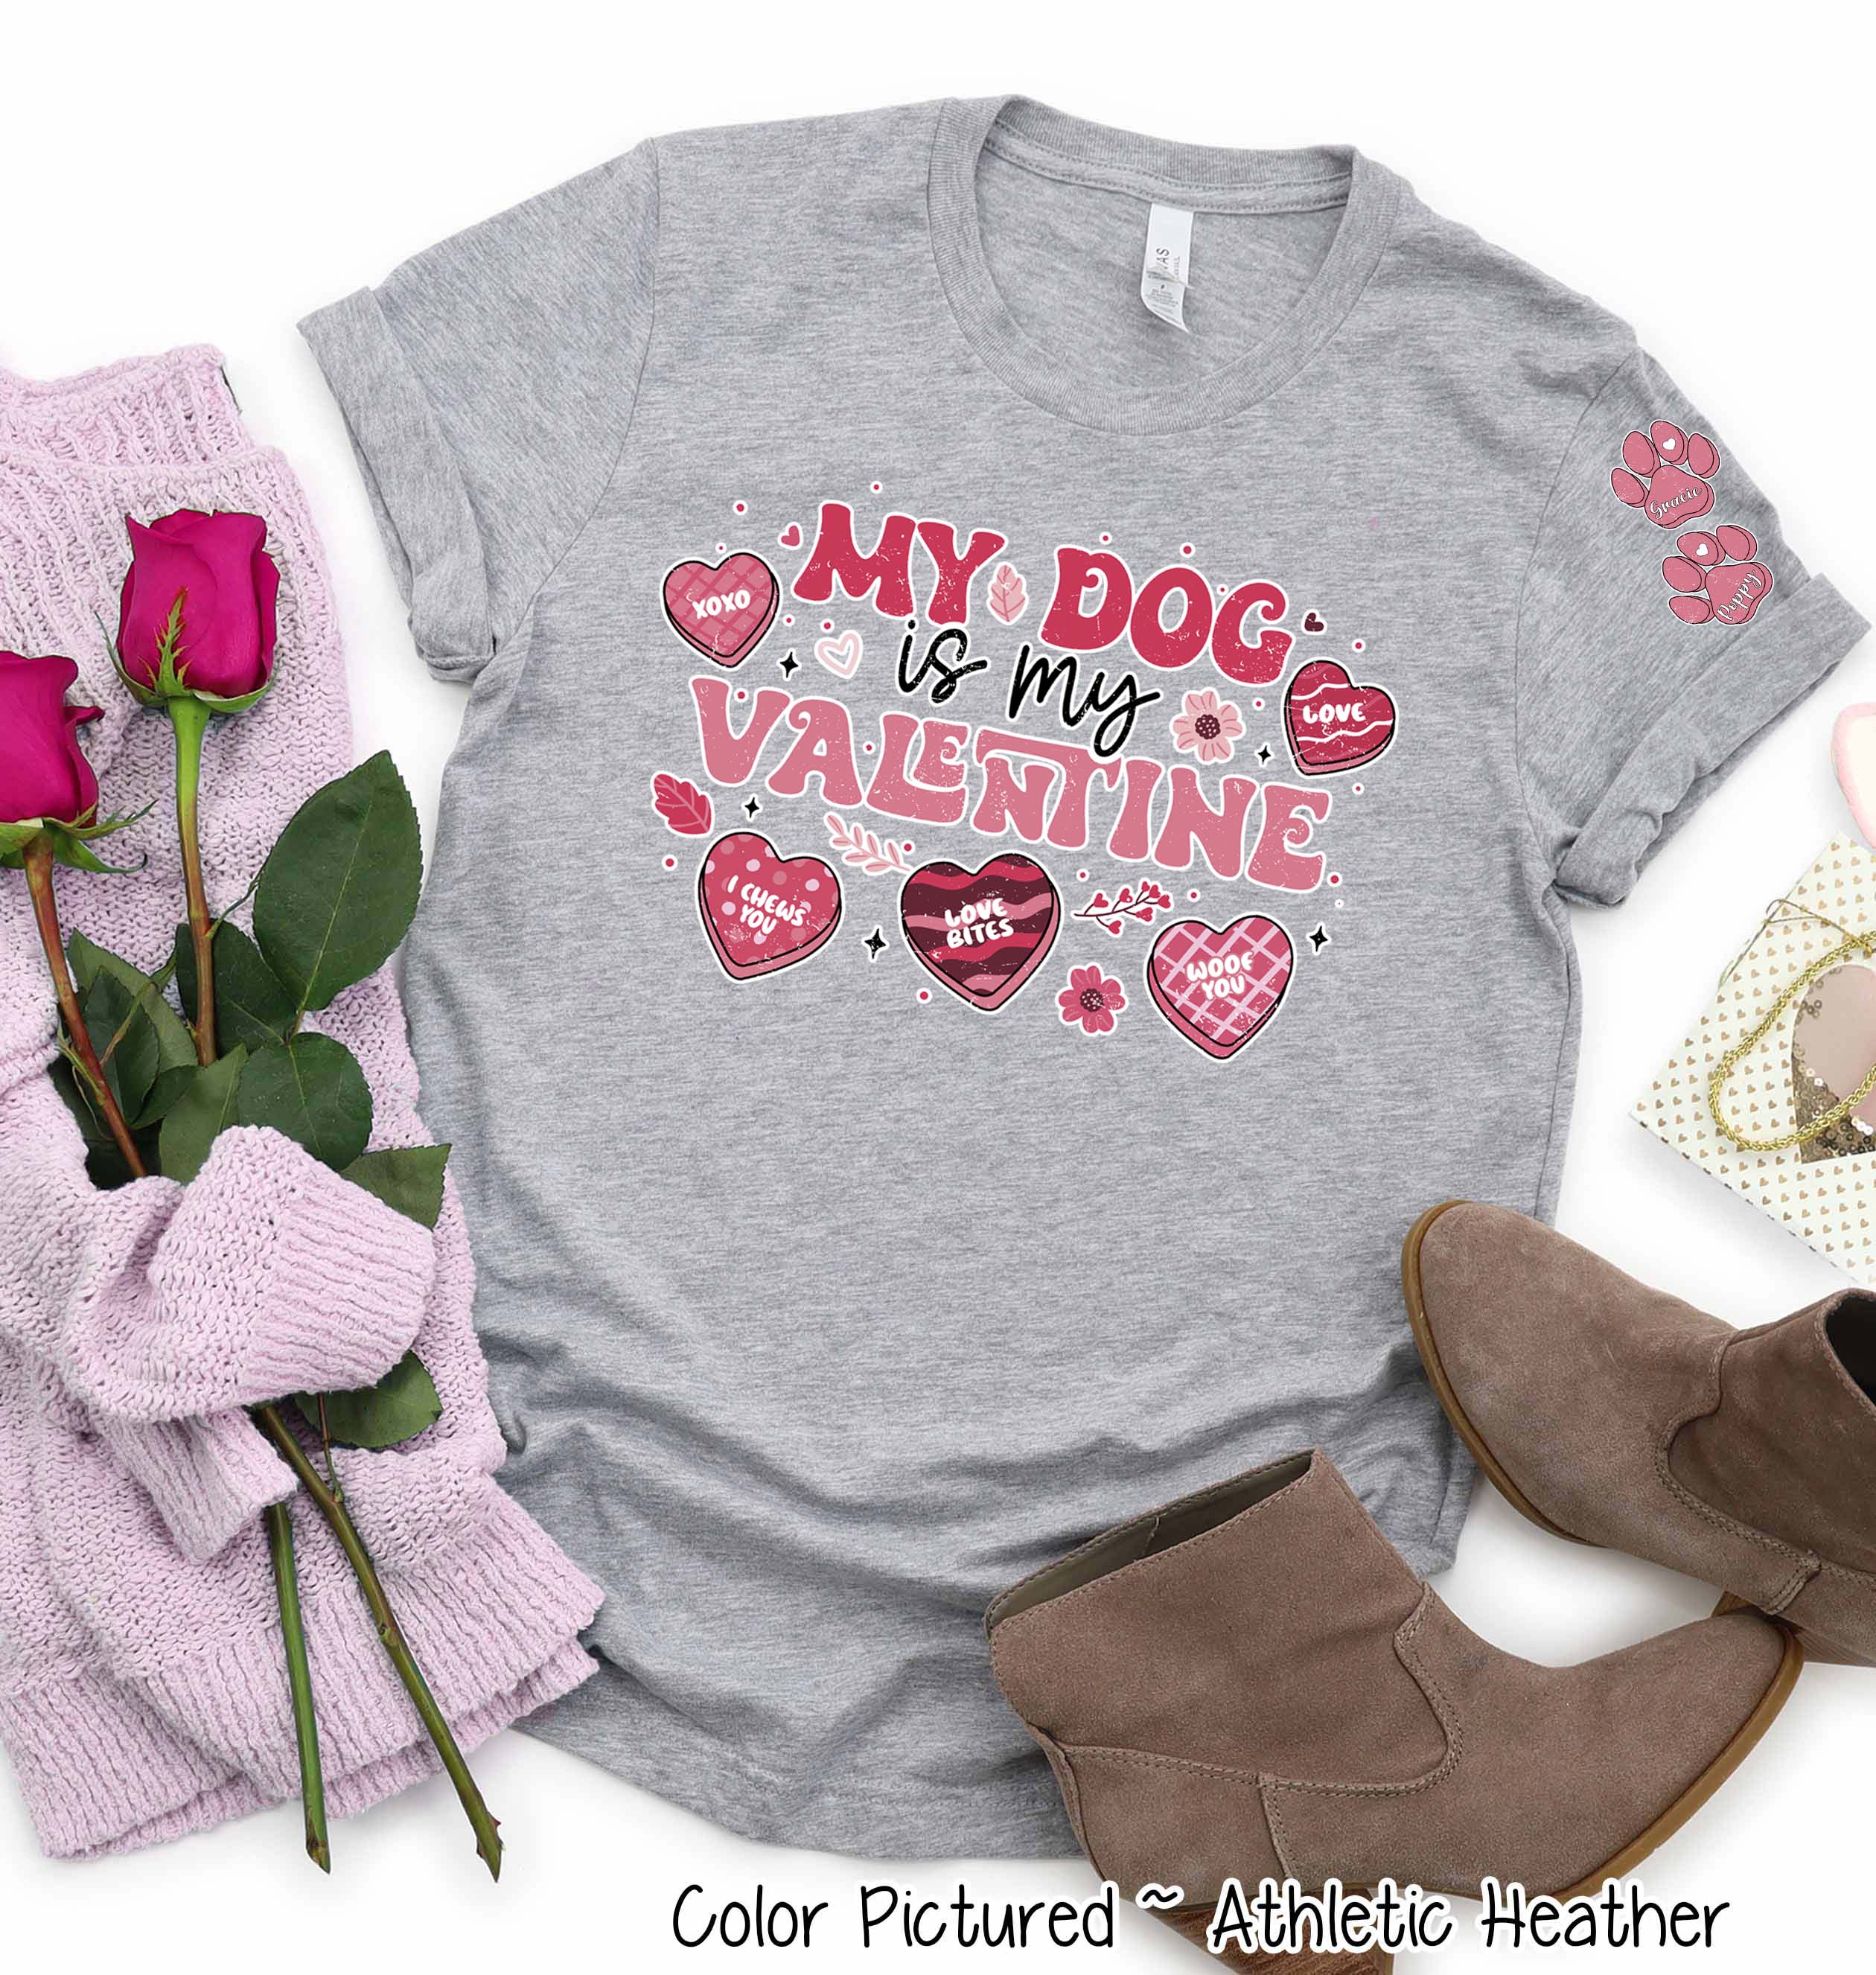 My Dog is My Valentine with Dog Name on Sleeve Tee or Sweatshirt